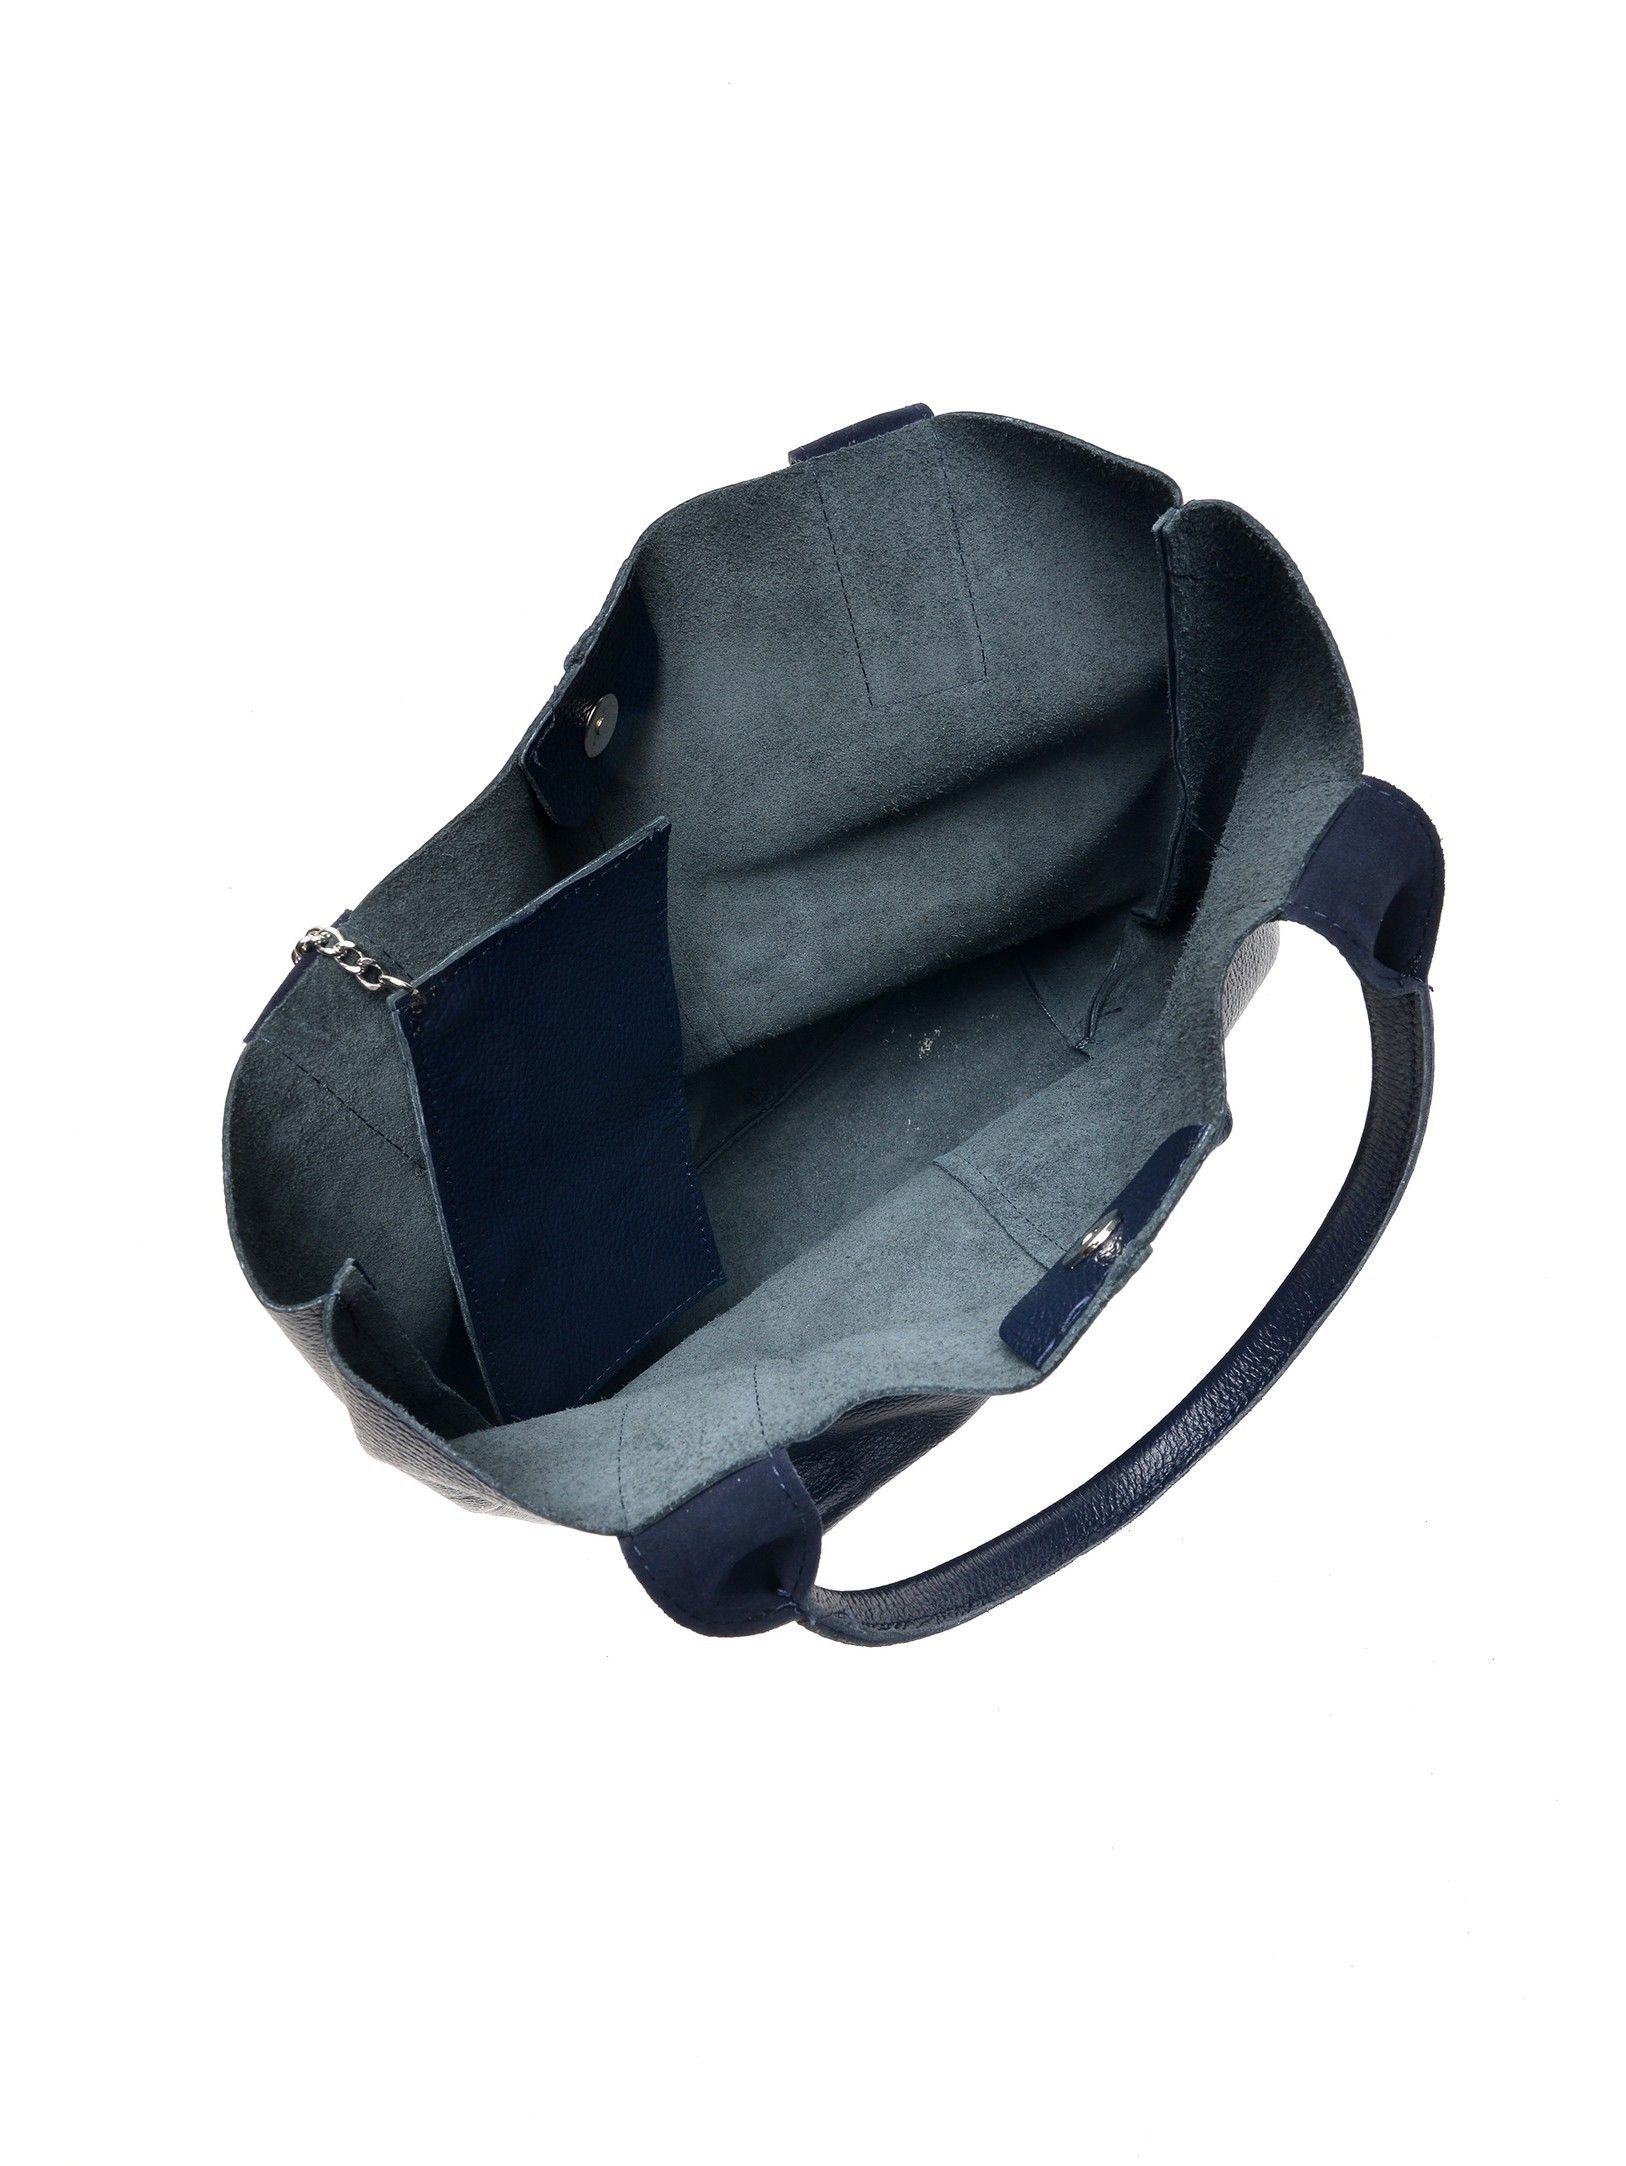 Tote Bag
100% cow leather
Magnetic clasp closure
Inner coin purse
Tassel detail
Dimensions (L): 36x41x15 cm
Handle: 54 cm non adjustable
Shoulder strap: / cm adjustable